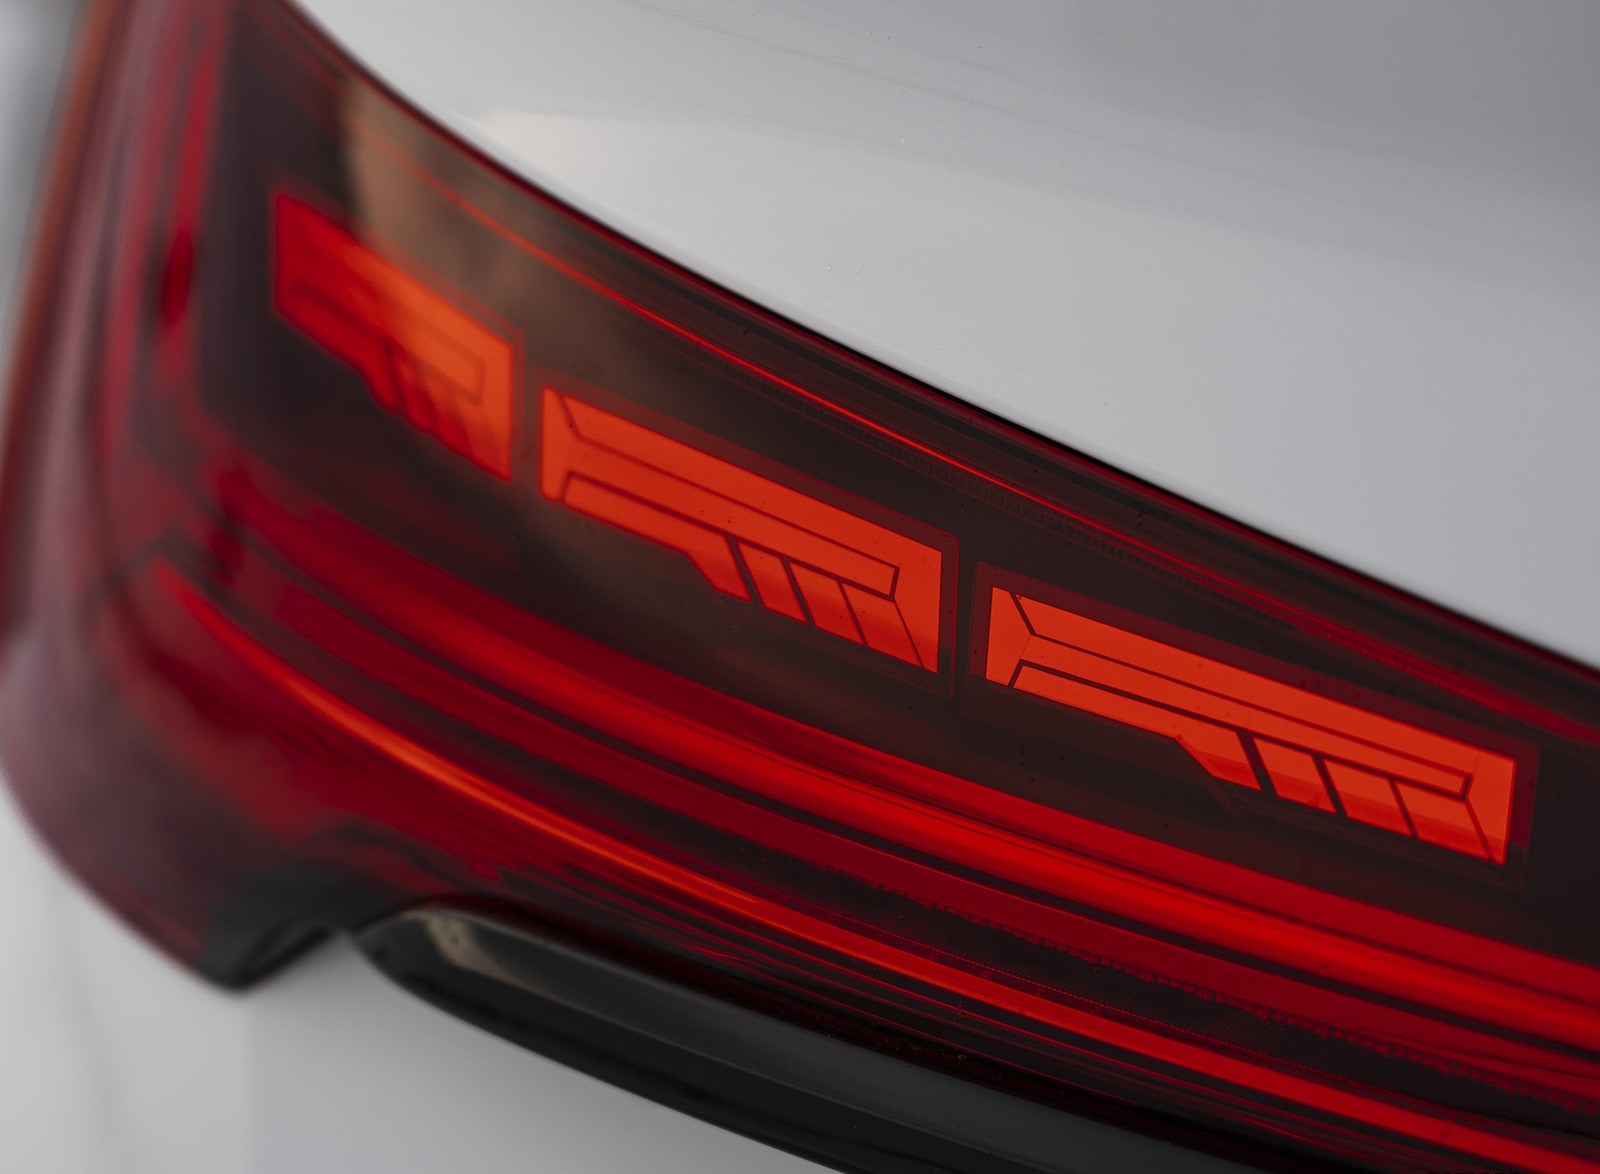 2021 Audi Q5 Sportback (Color: Glacier White) Tail Light Wallpapers  #24 of 158